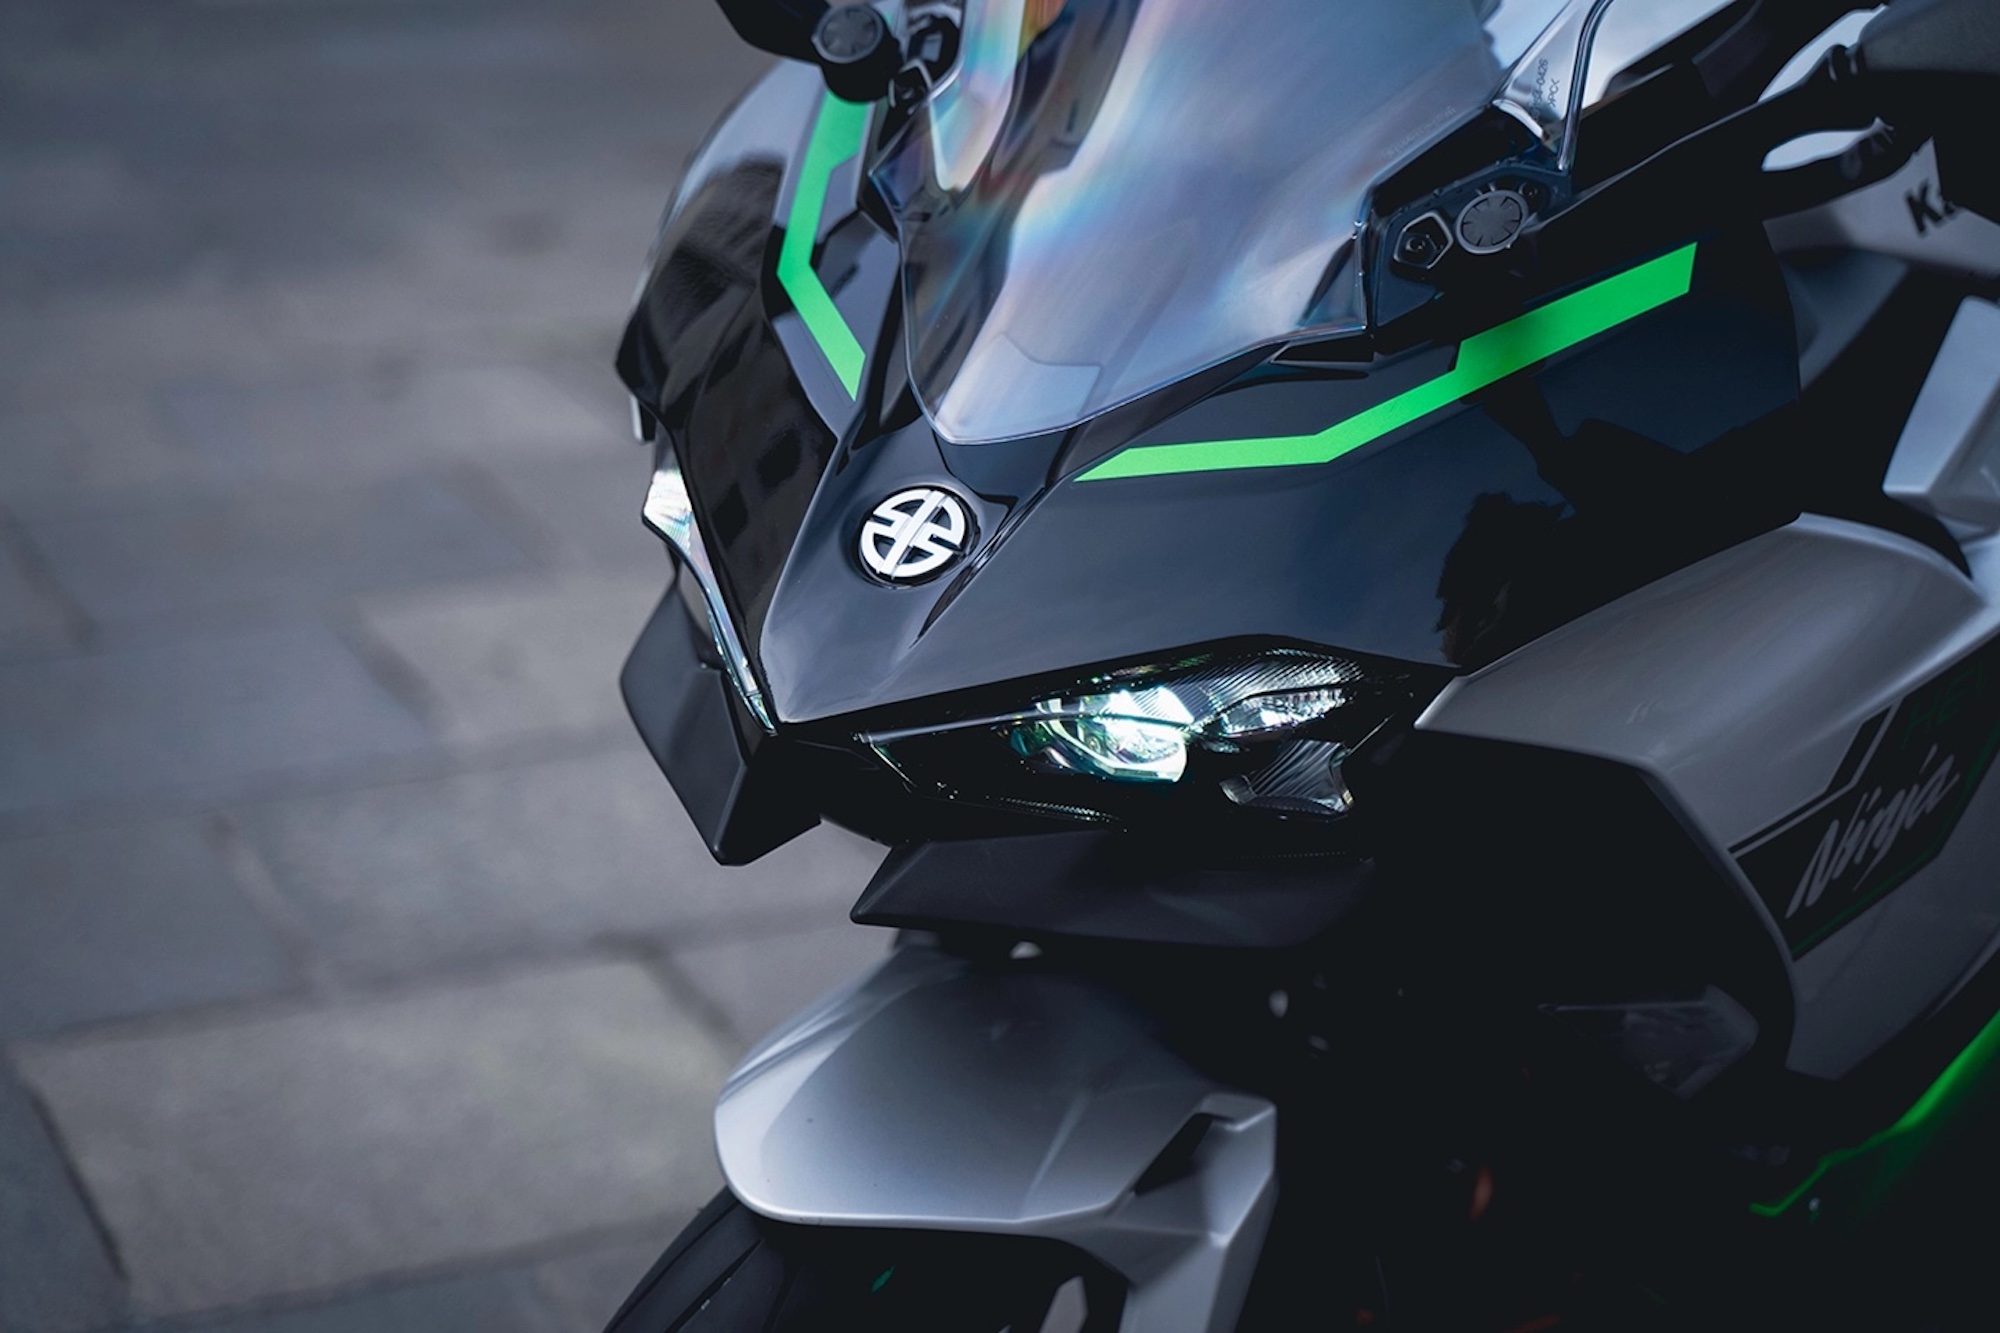 Will the Kawasaki Ninja 7 Hybrid, with its impressive 69bhp, be making its way to India?